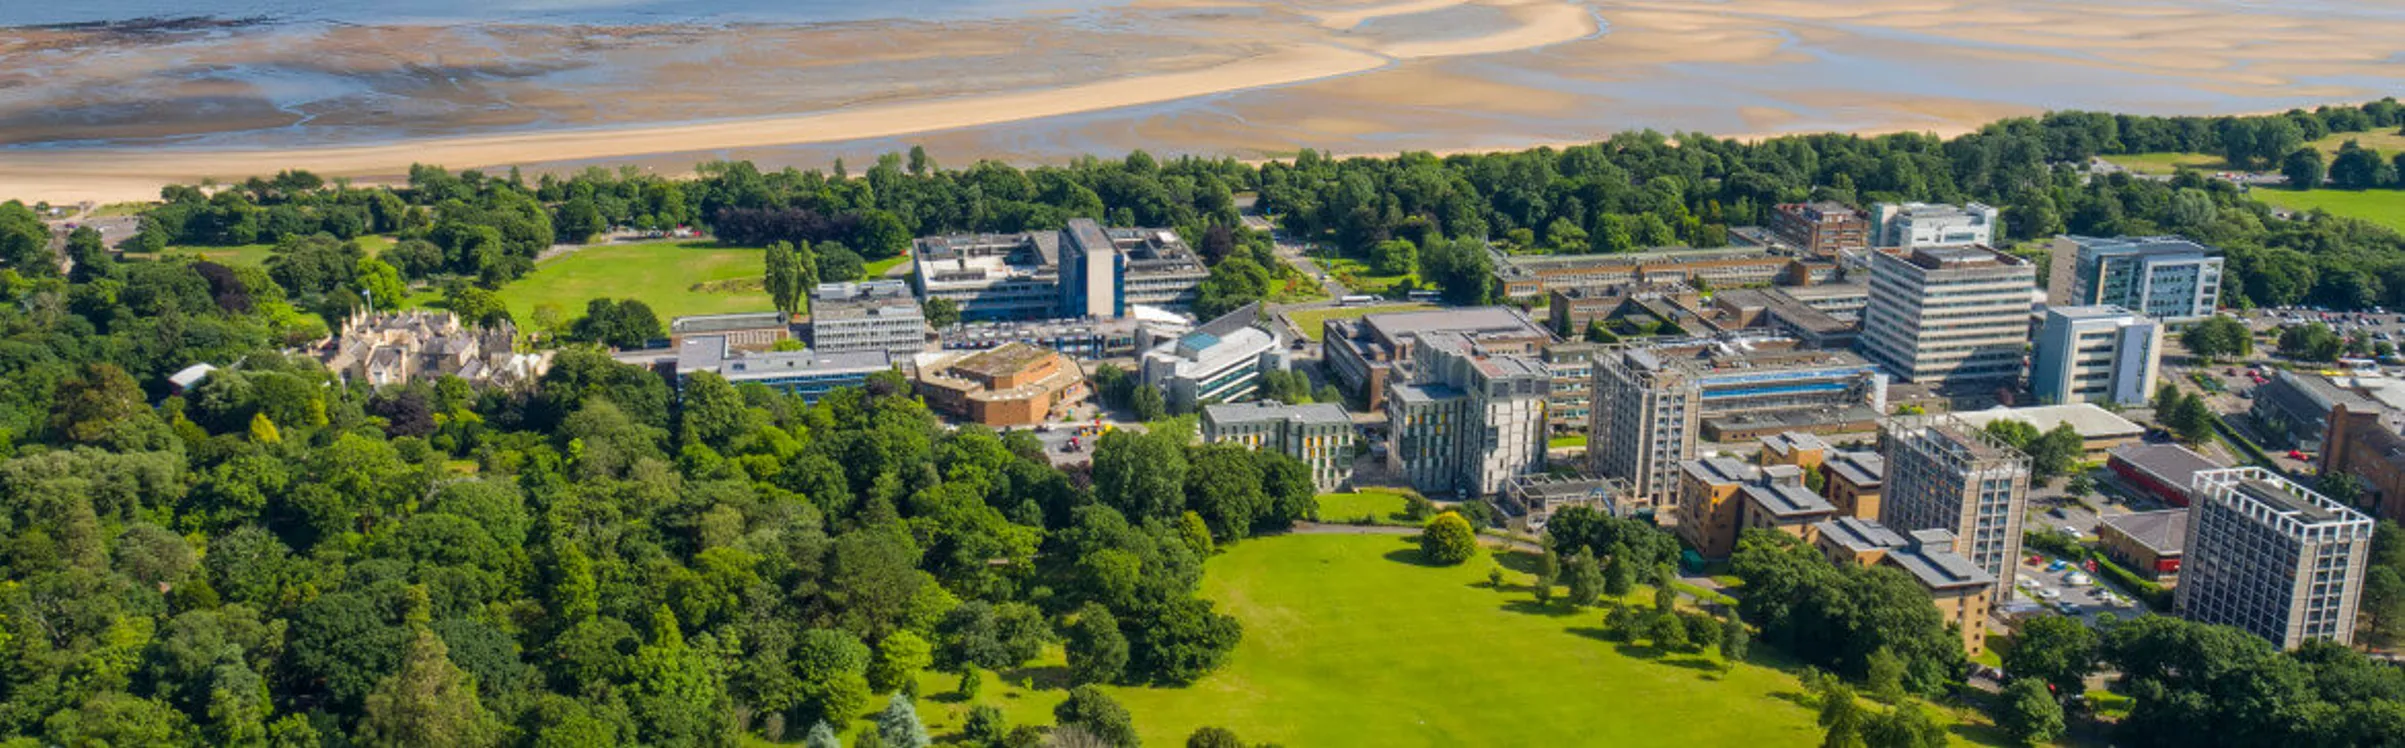 Swansea University campus